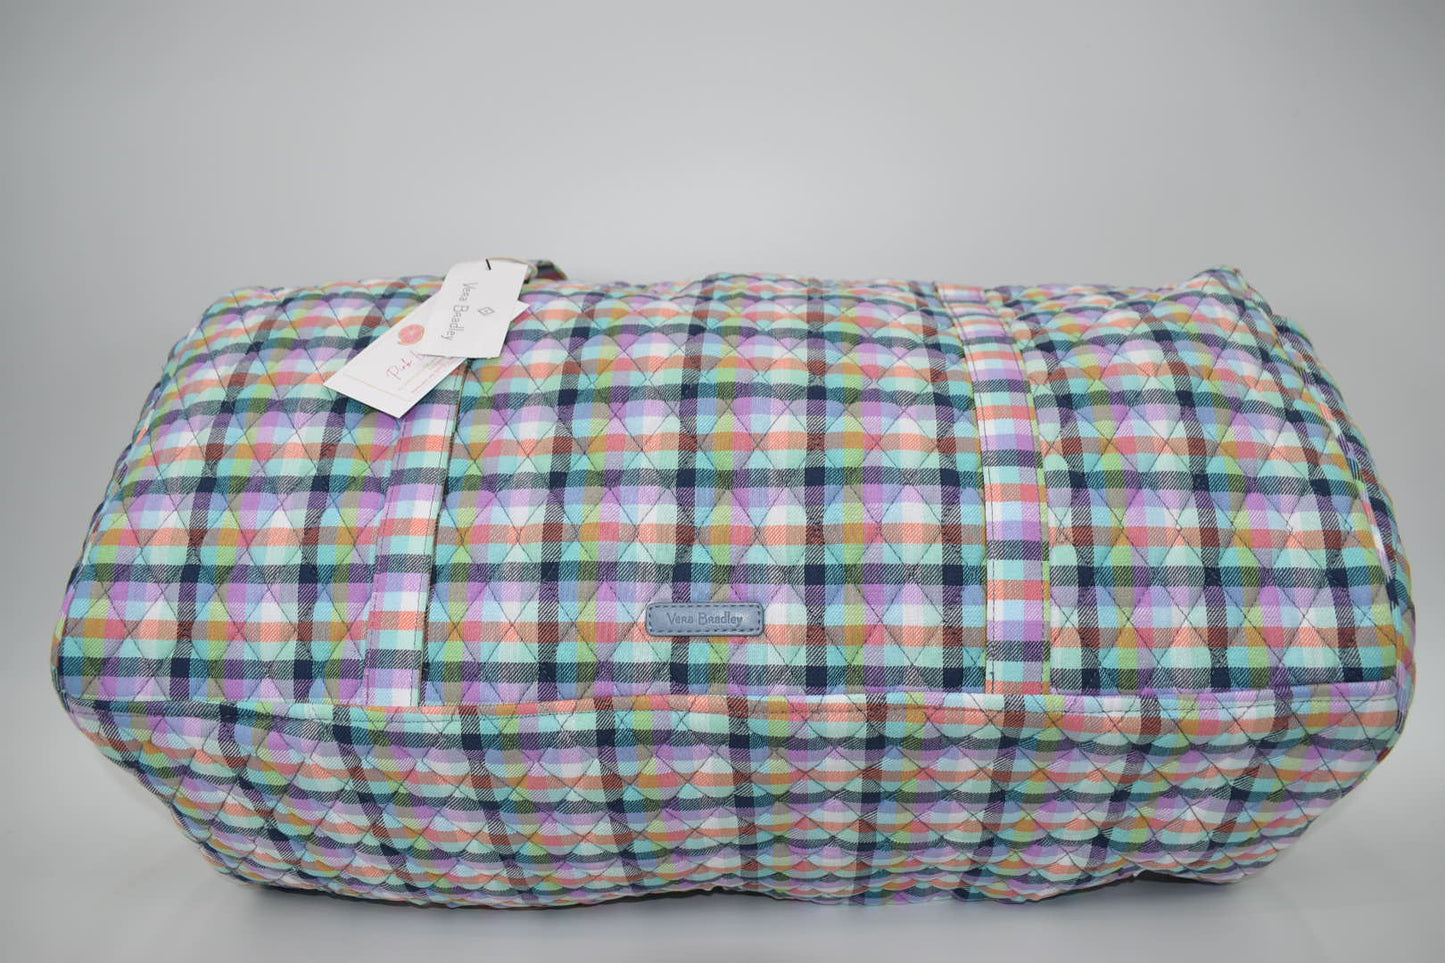 Vera Bradley Large Traveler Duffel Bag in "Gingham Plaid" Pattern